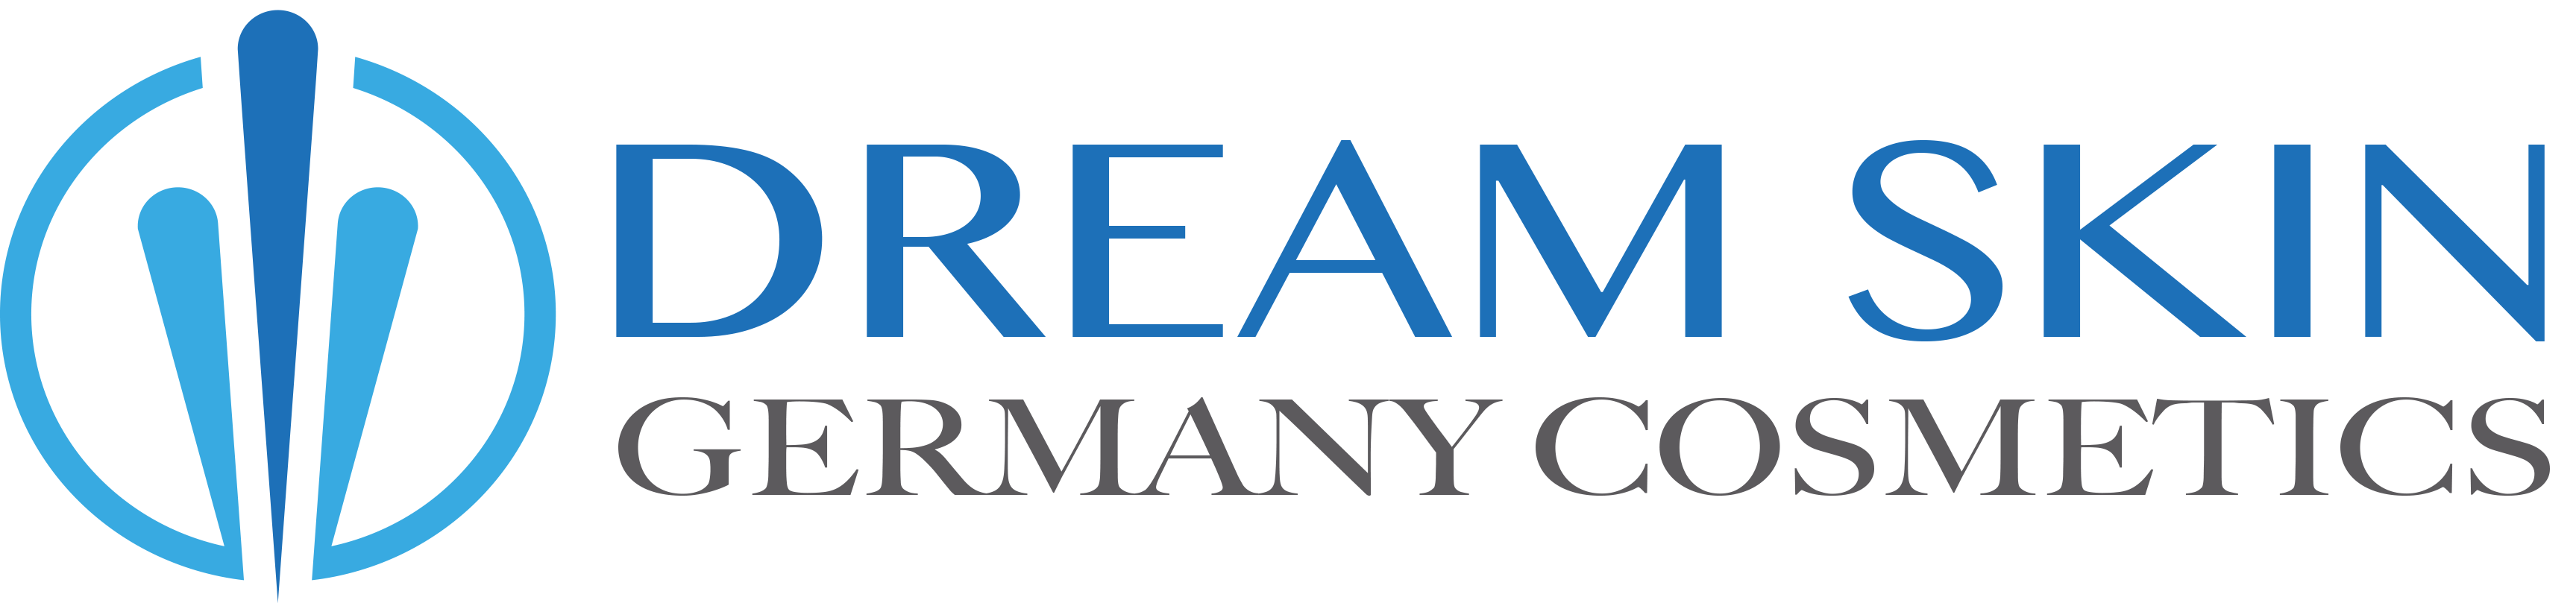 Dreamskin GmbH – Germany